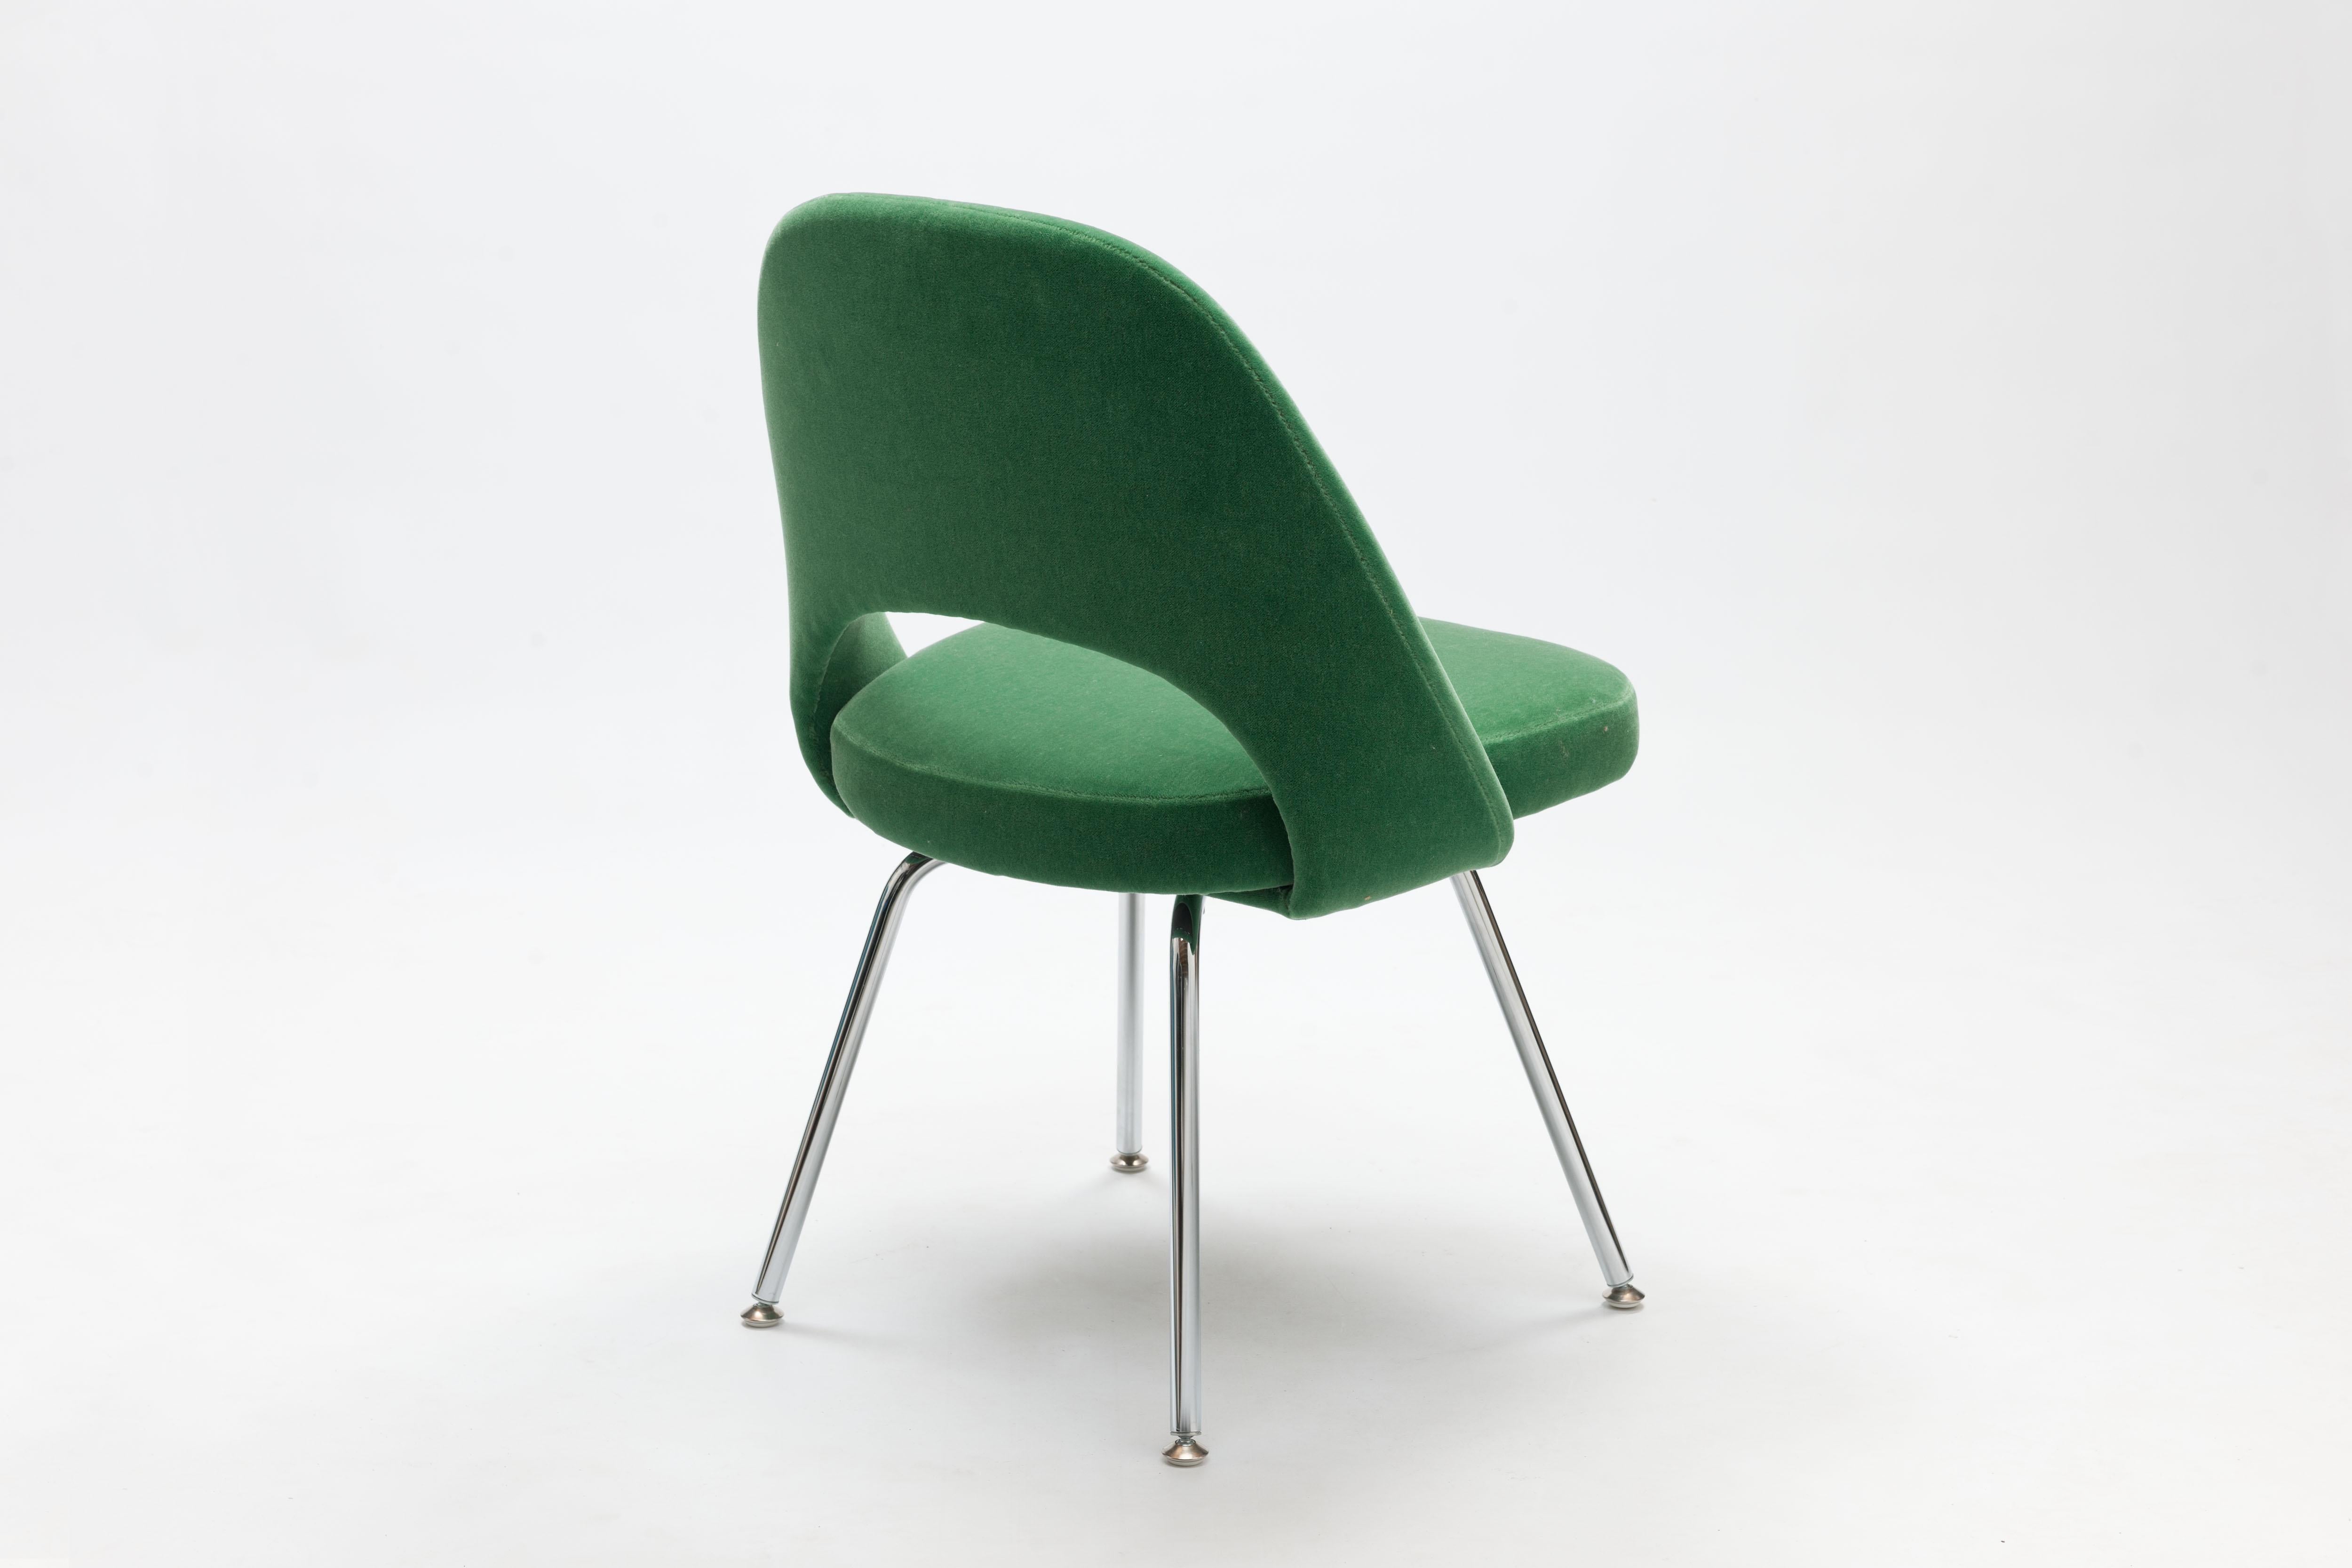 Steel Eero Saarinen Model 72, Executive Side Chair in Green Mohair Fabric by Knoll